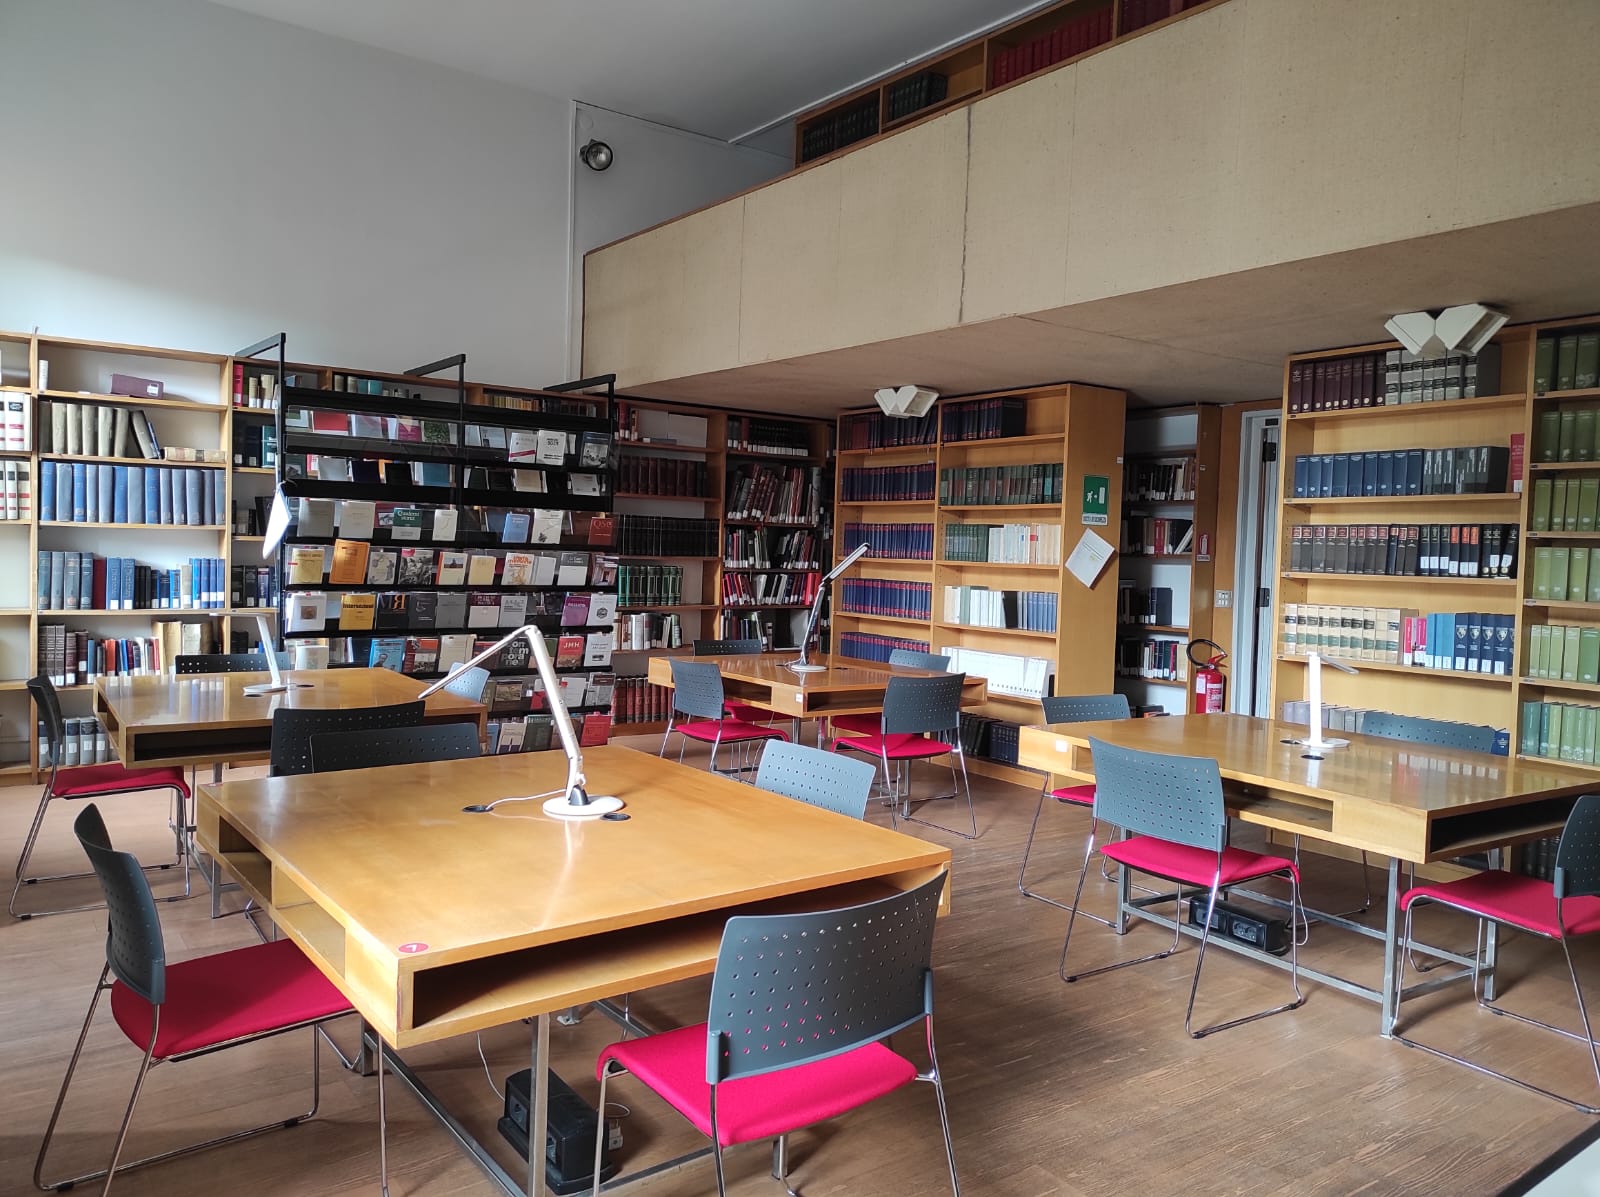 New chairs for the Reading Room - Fondazione Luigi Einaudi